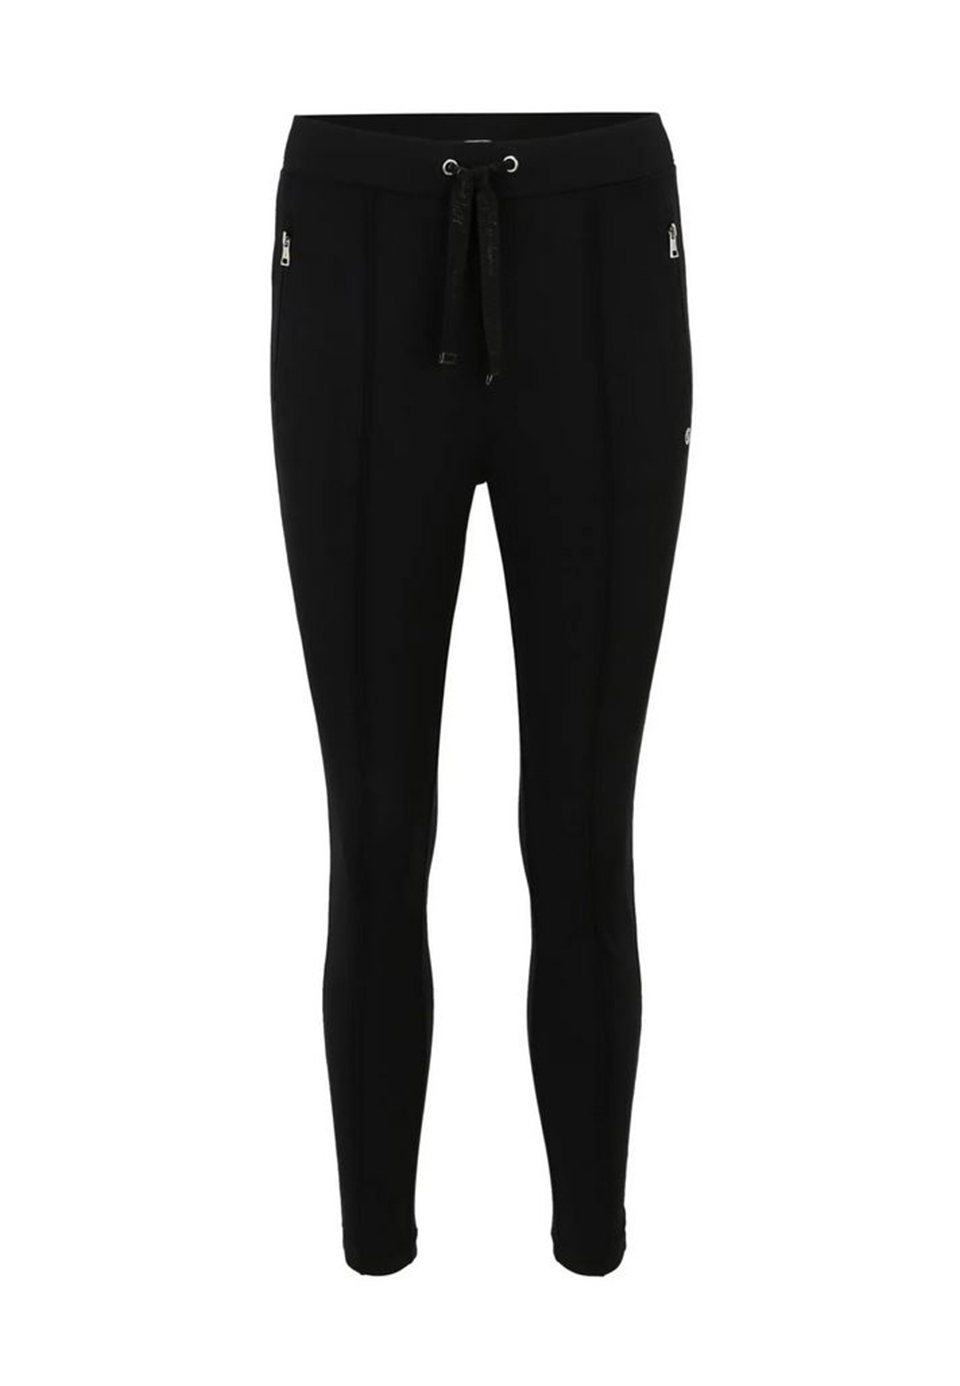 JOY Sportswear Damen Sportiv elegante Leggings ADELE 36891 black